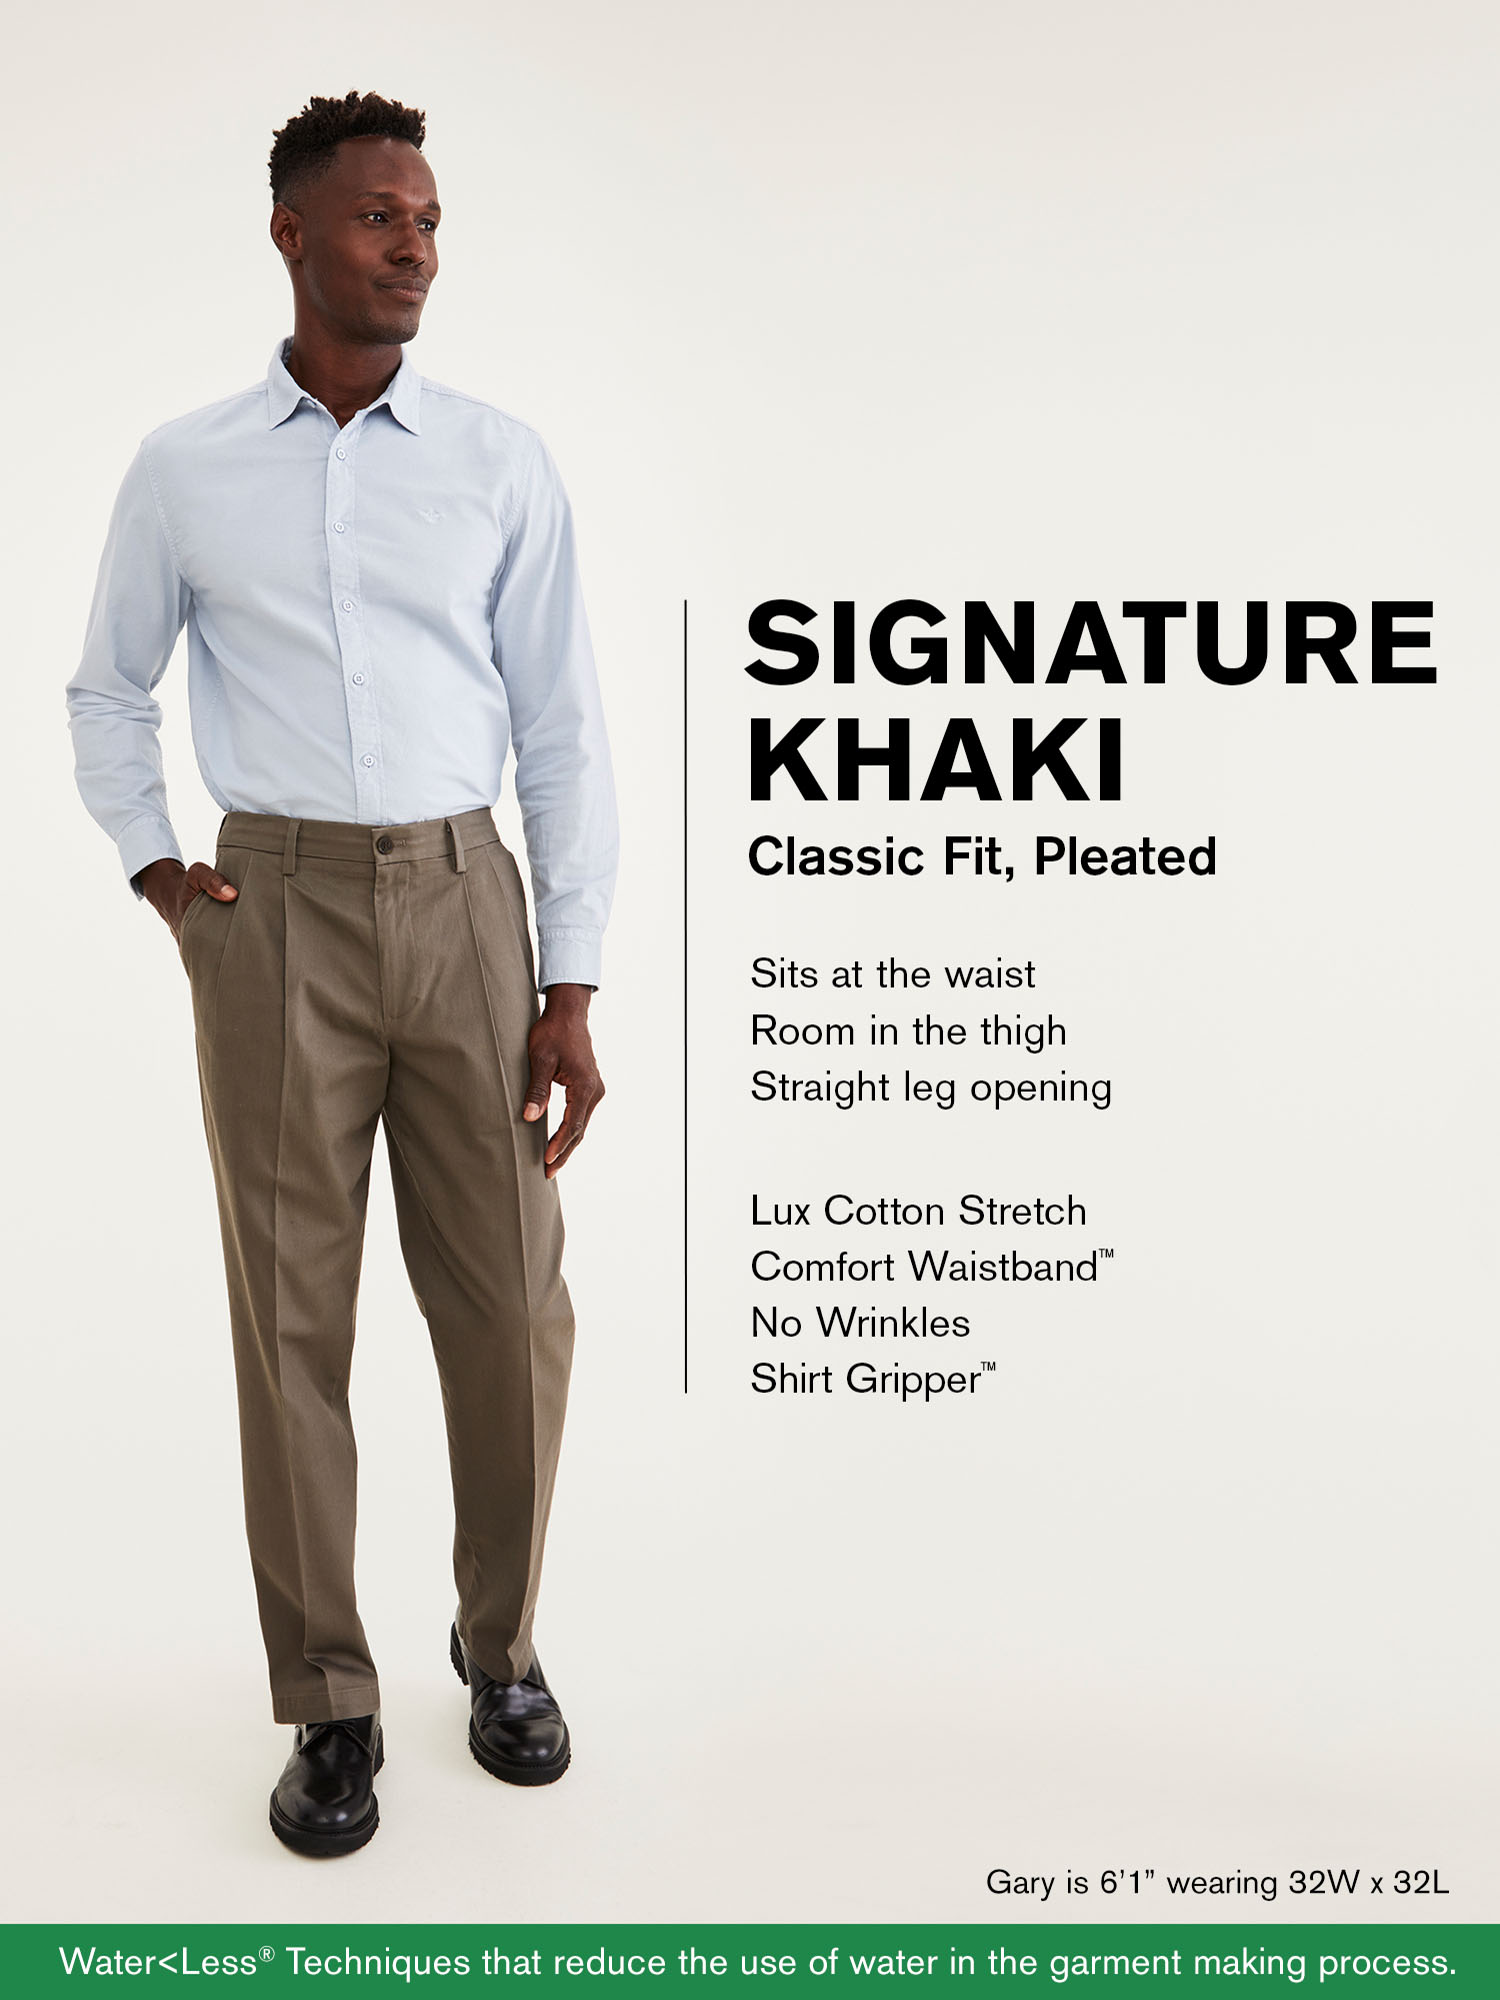 Dockers Men's Pleated Classic Fit Signature Khaki Lux Cotton Stretch Pants - image 3 of 6